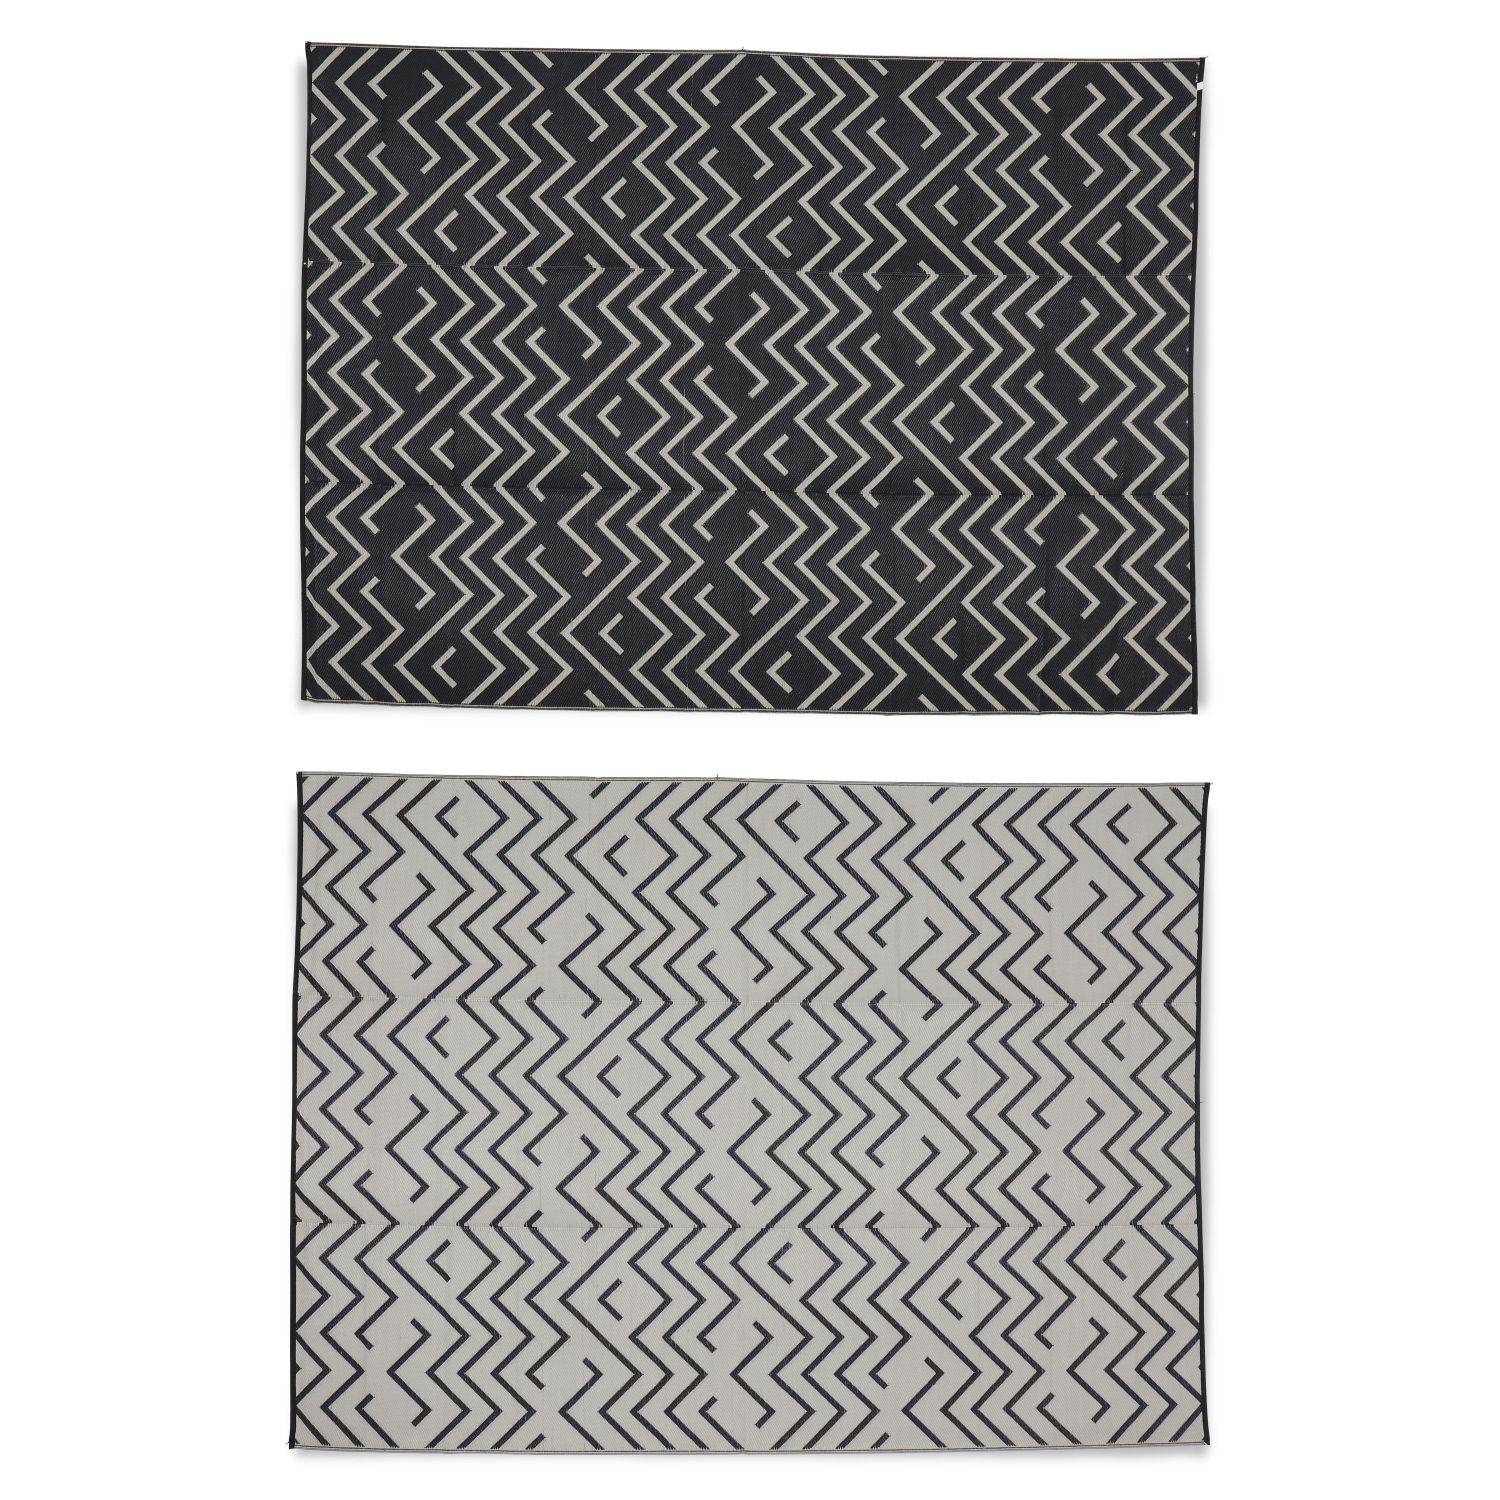 Alfombra de exterior 270x360cm SYDNEY - Rectangular, patrón de ondas negro / beige, jacquard, reversible, interior / exterior Photo2